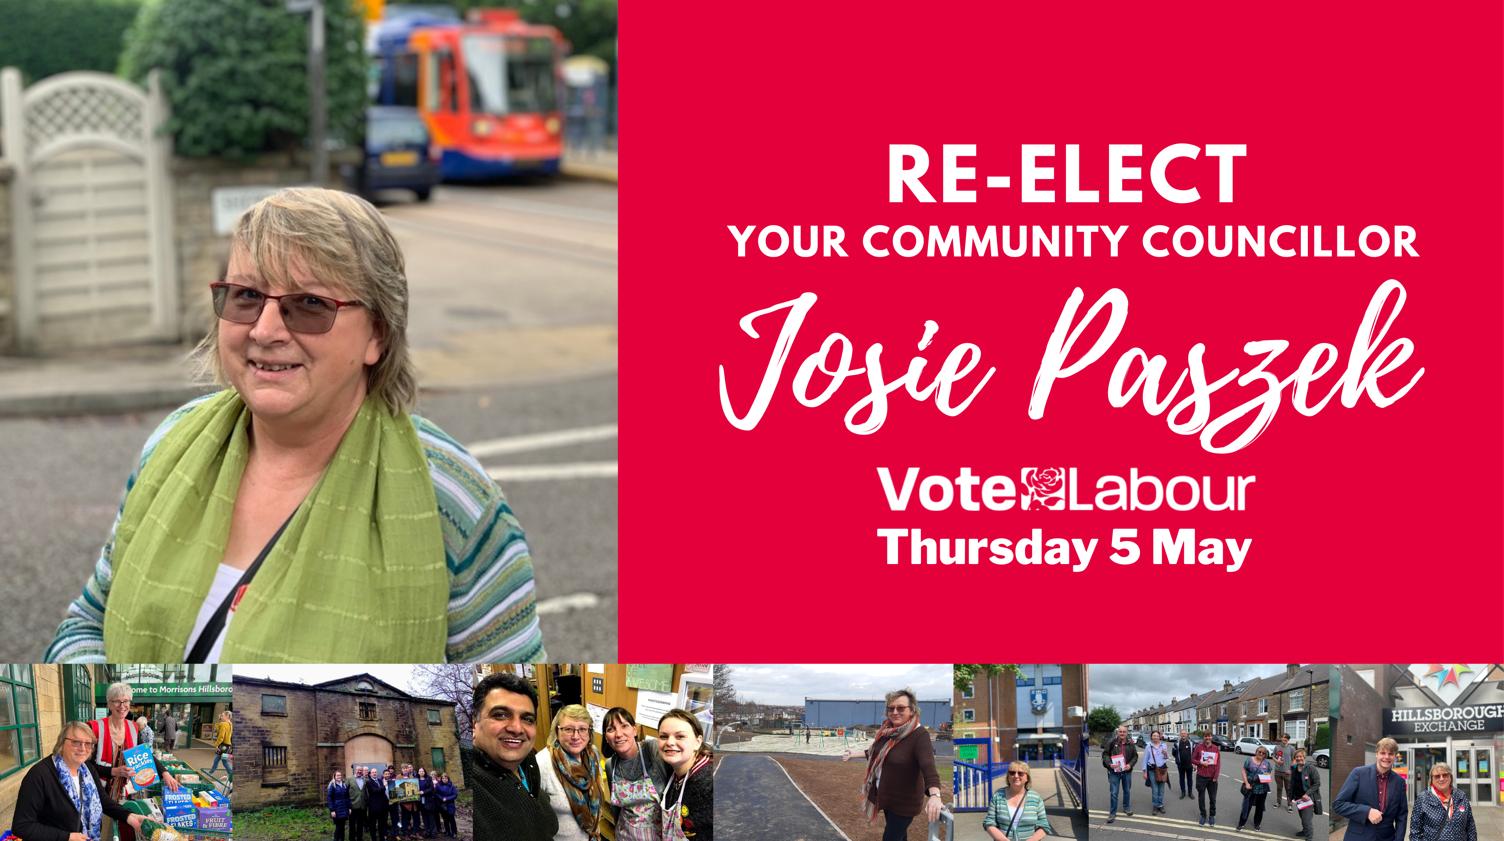 Re-Elect Josie Paszek, your community champion